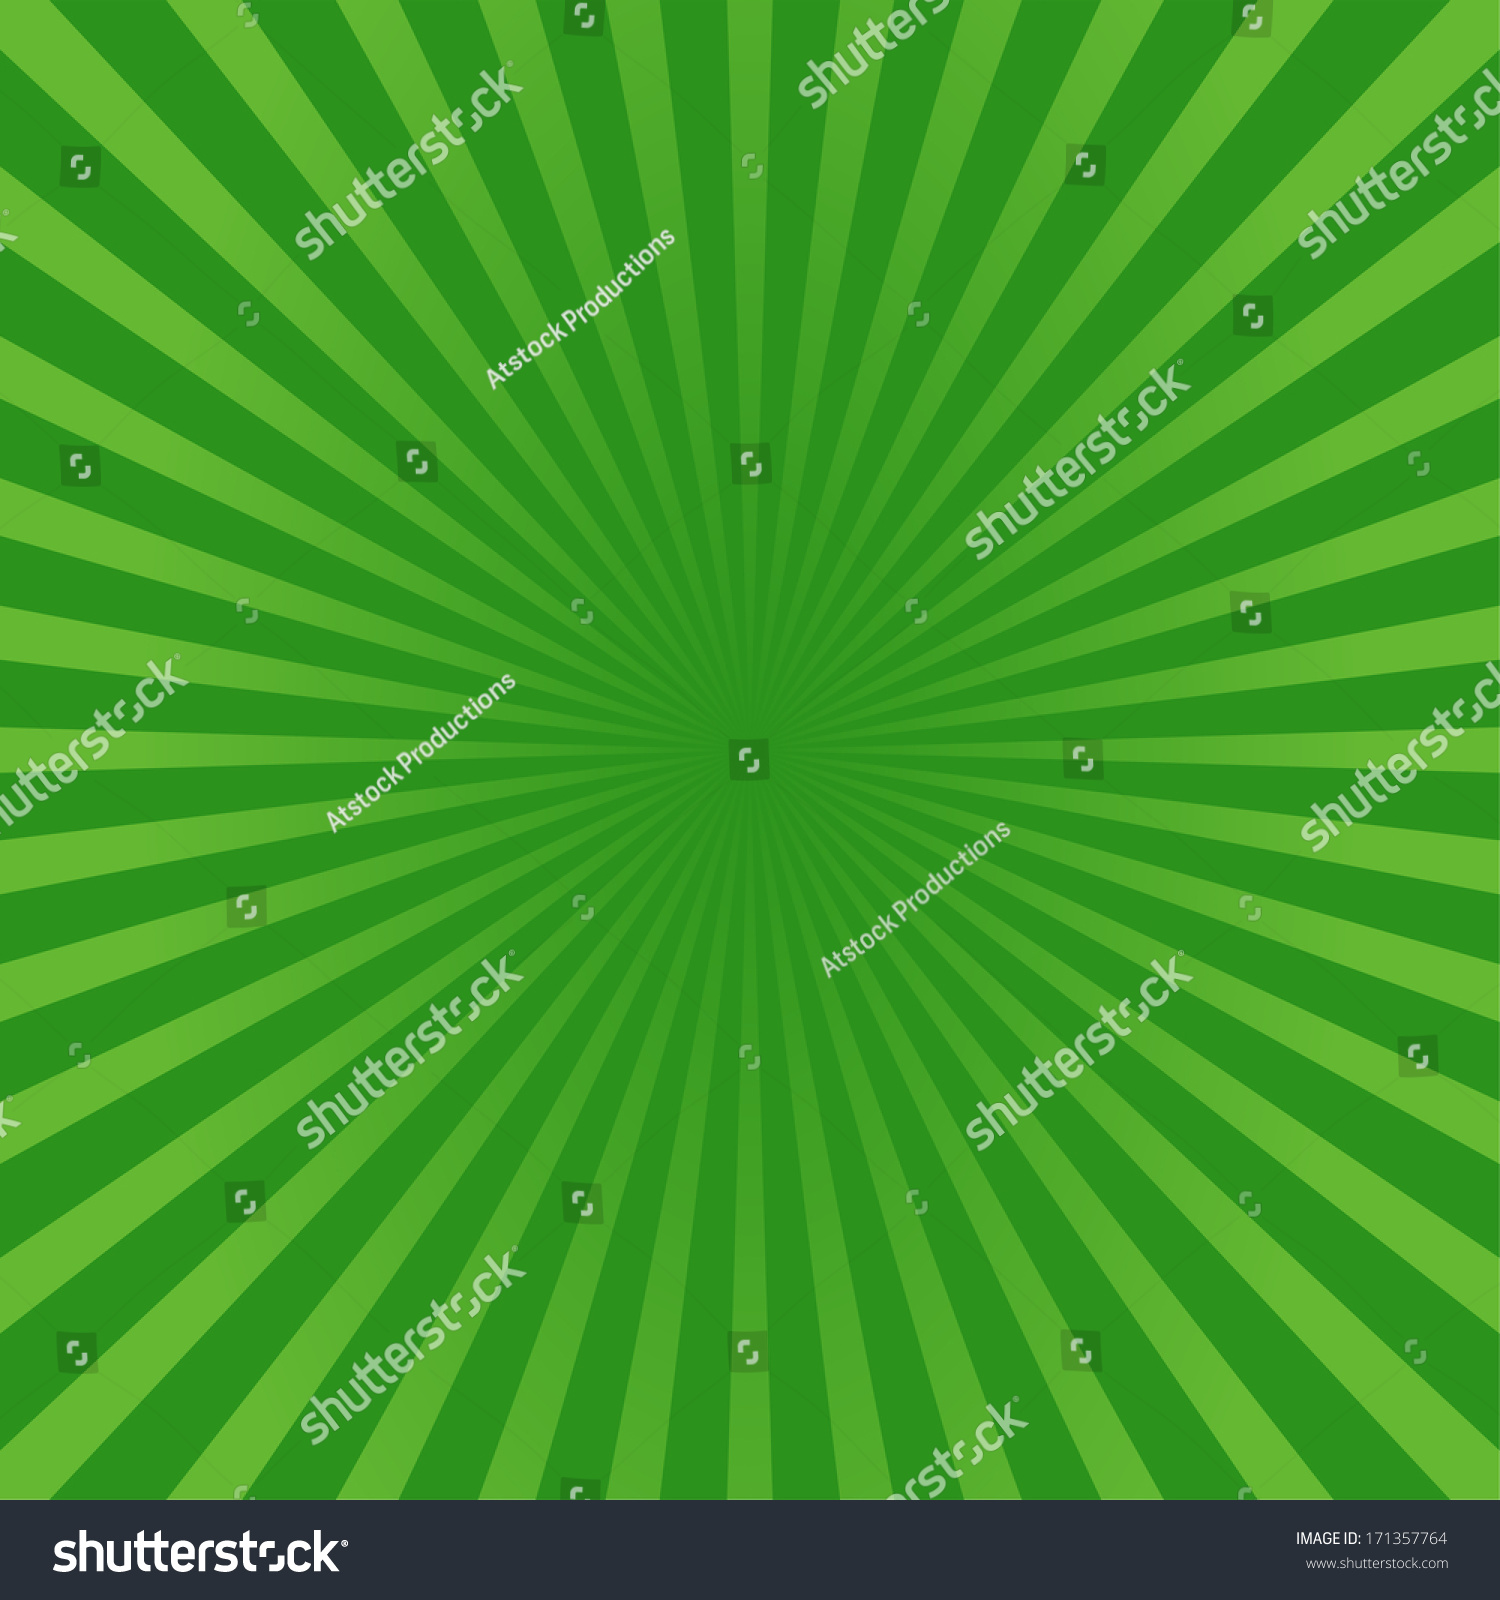 Abstract Green Sunburst Style Background Stock Vector 171357764 ...